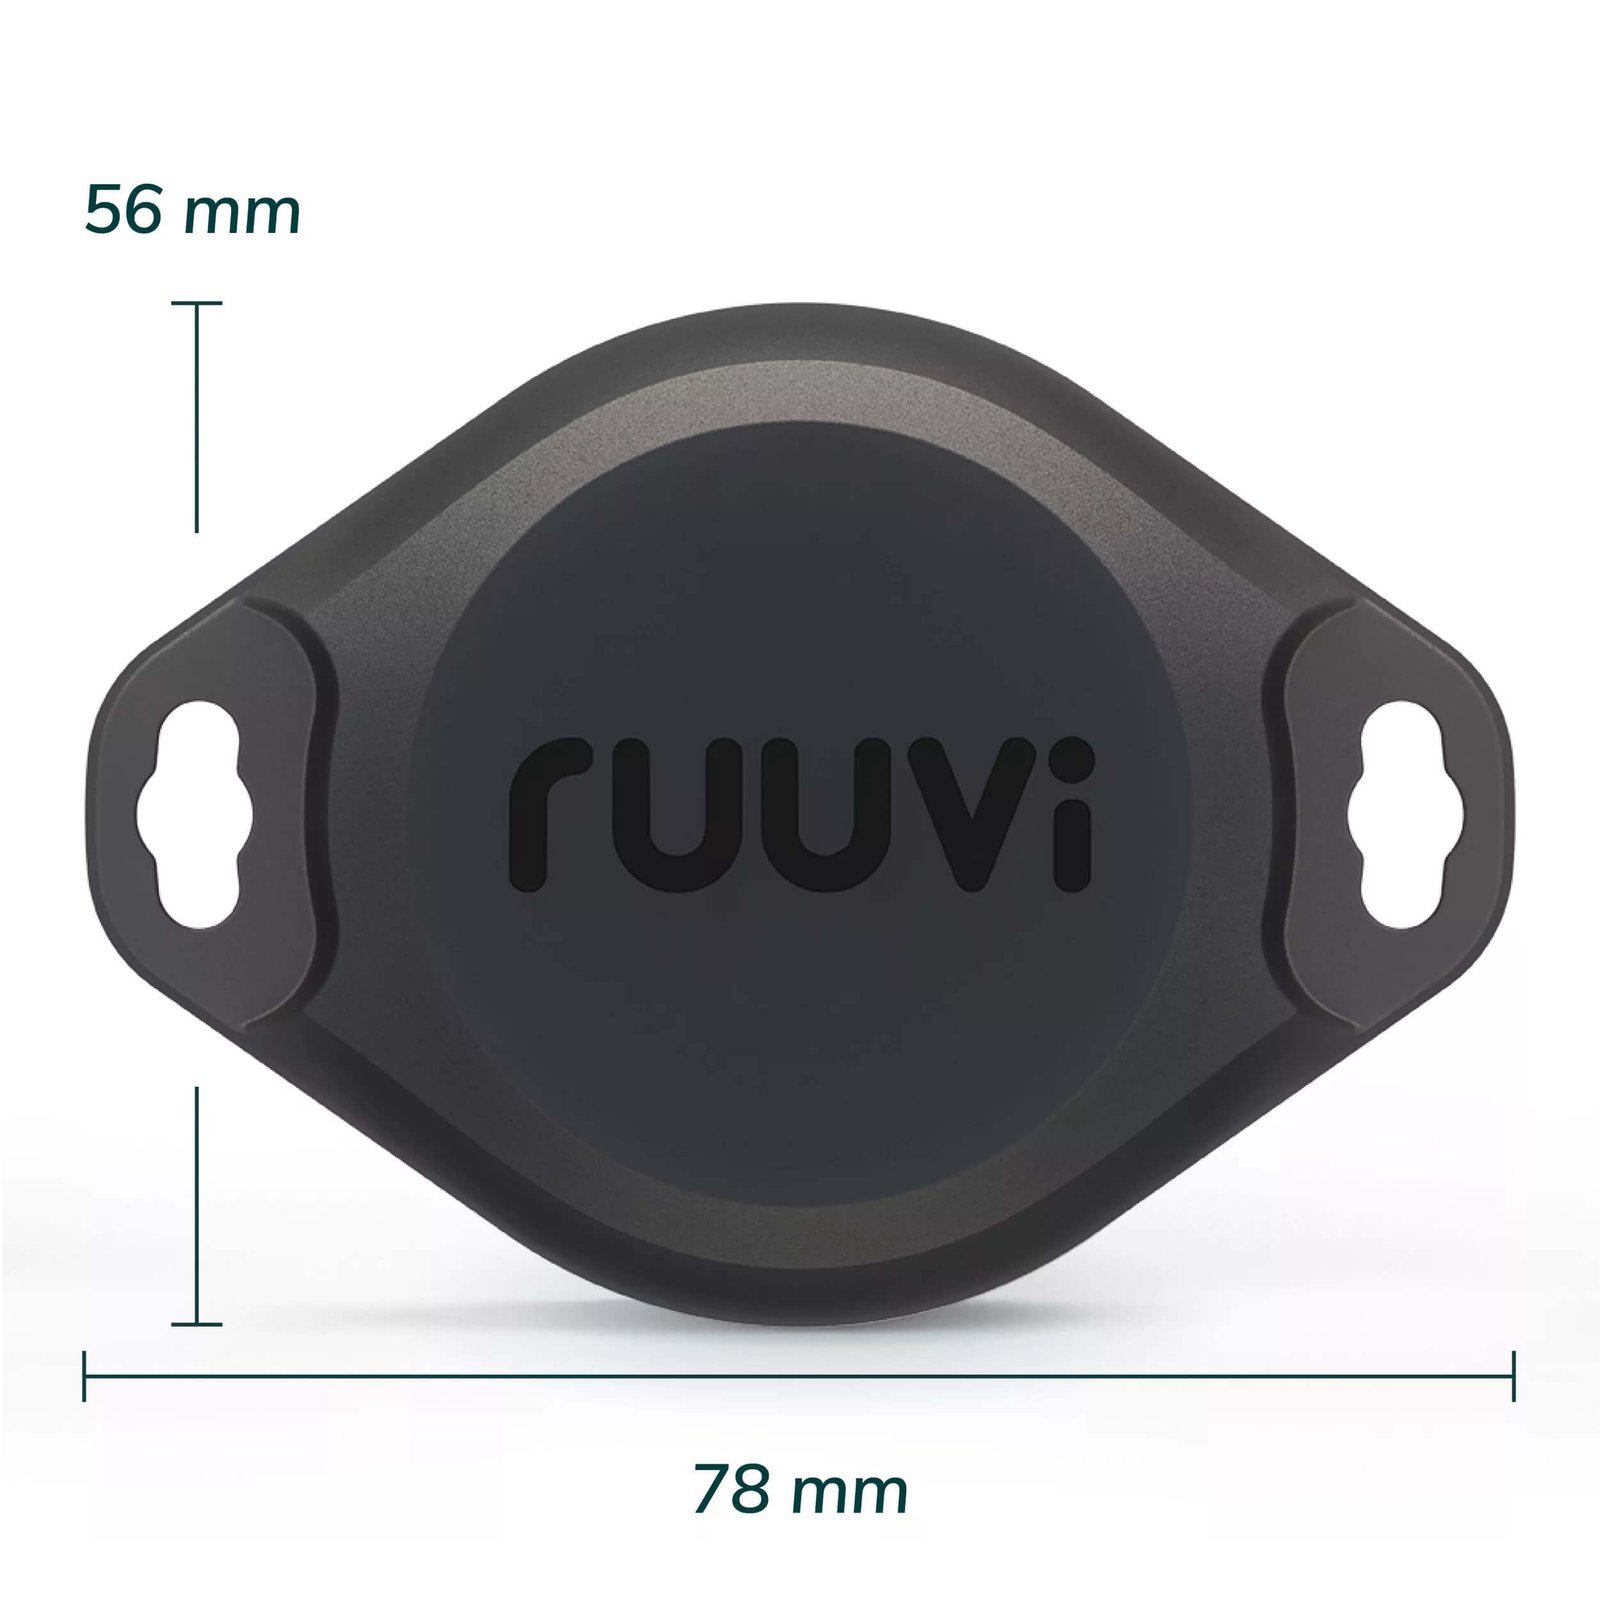 ruuvitag pro ruuvi tag 3 in 1 temperature humidity motion acceleration dimensions